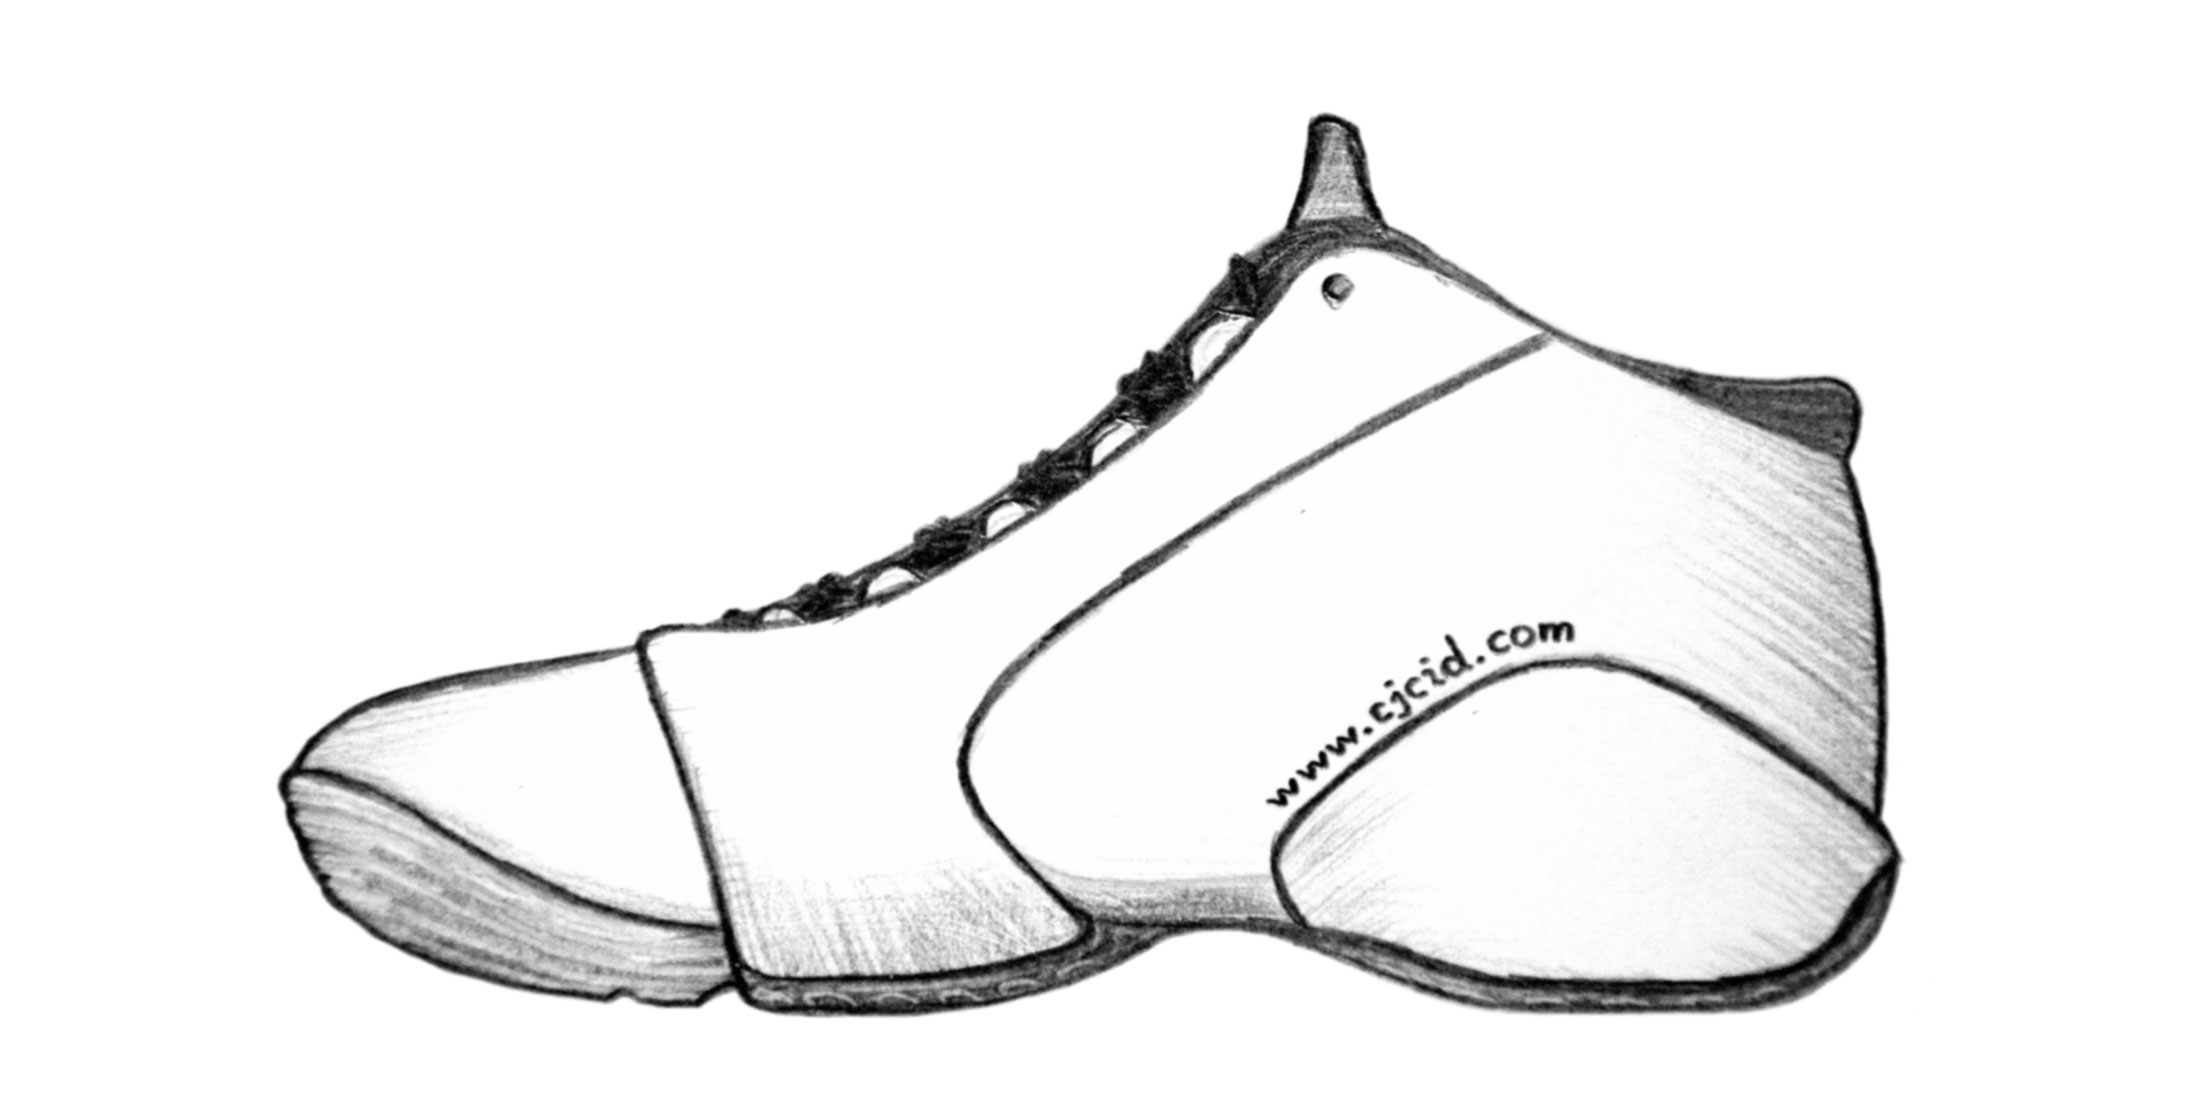 Illustration for the basketball shoe “CJ Rad GT”